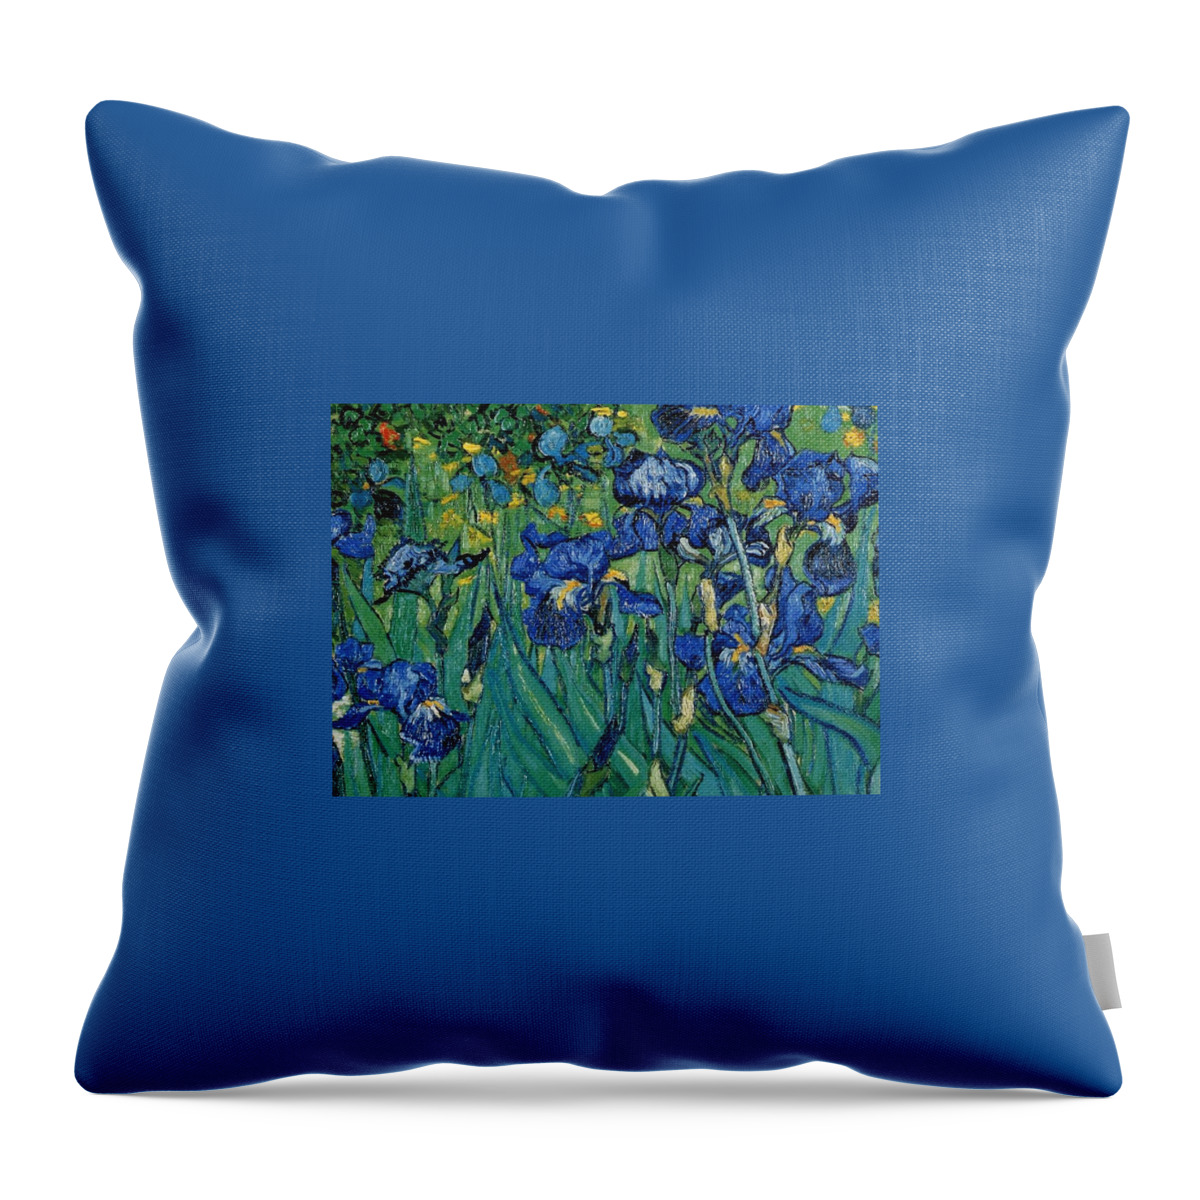 Vincent Van Gogh Iris Detail Throw Pillow featuring the painting Vincent Van Gogh Iris detail by MotionAge Designs